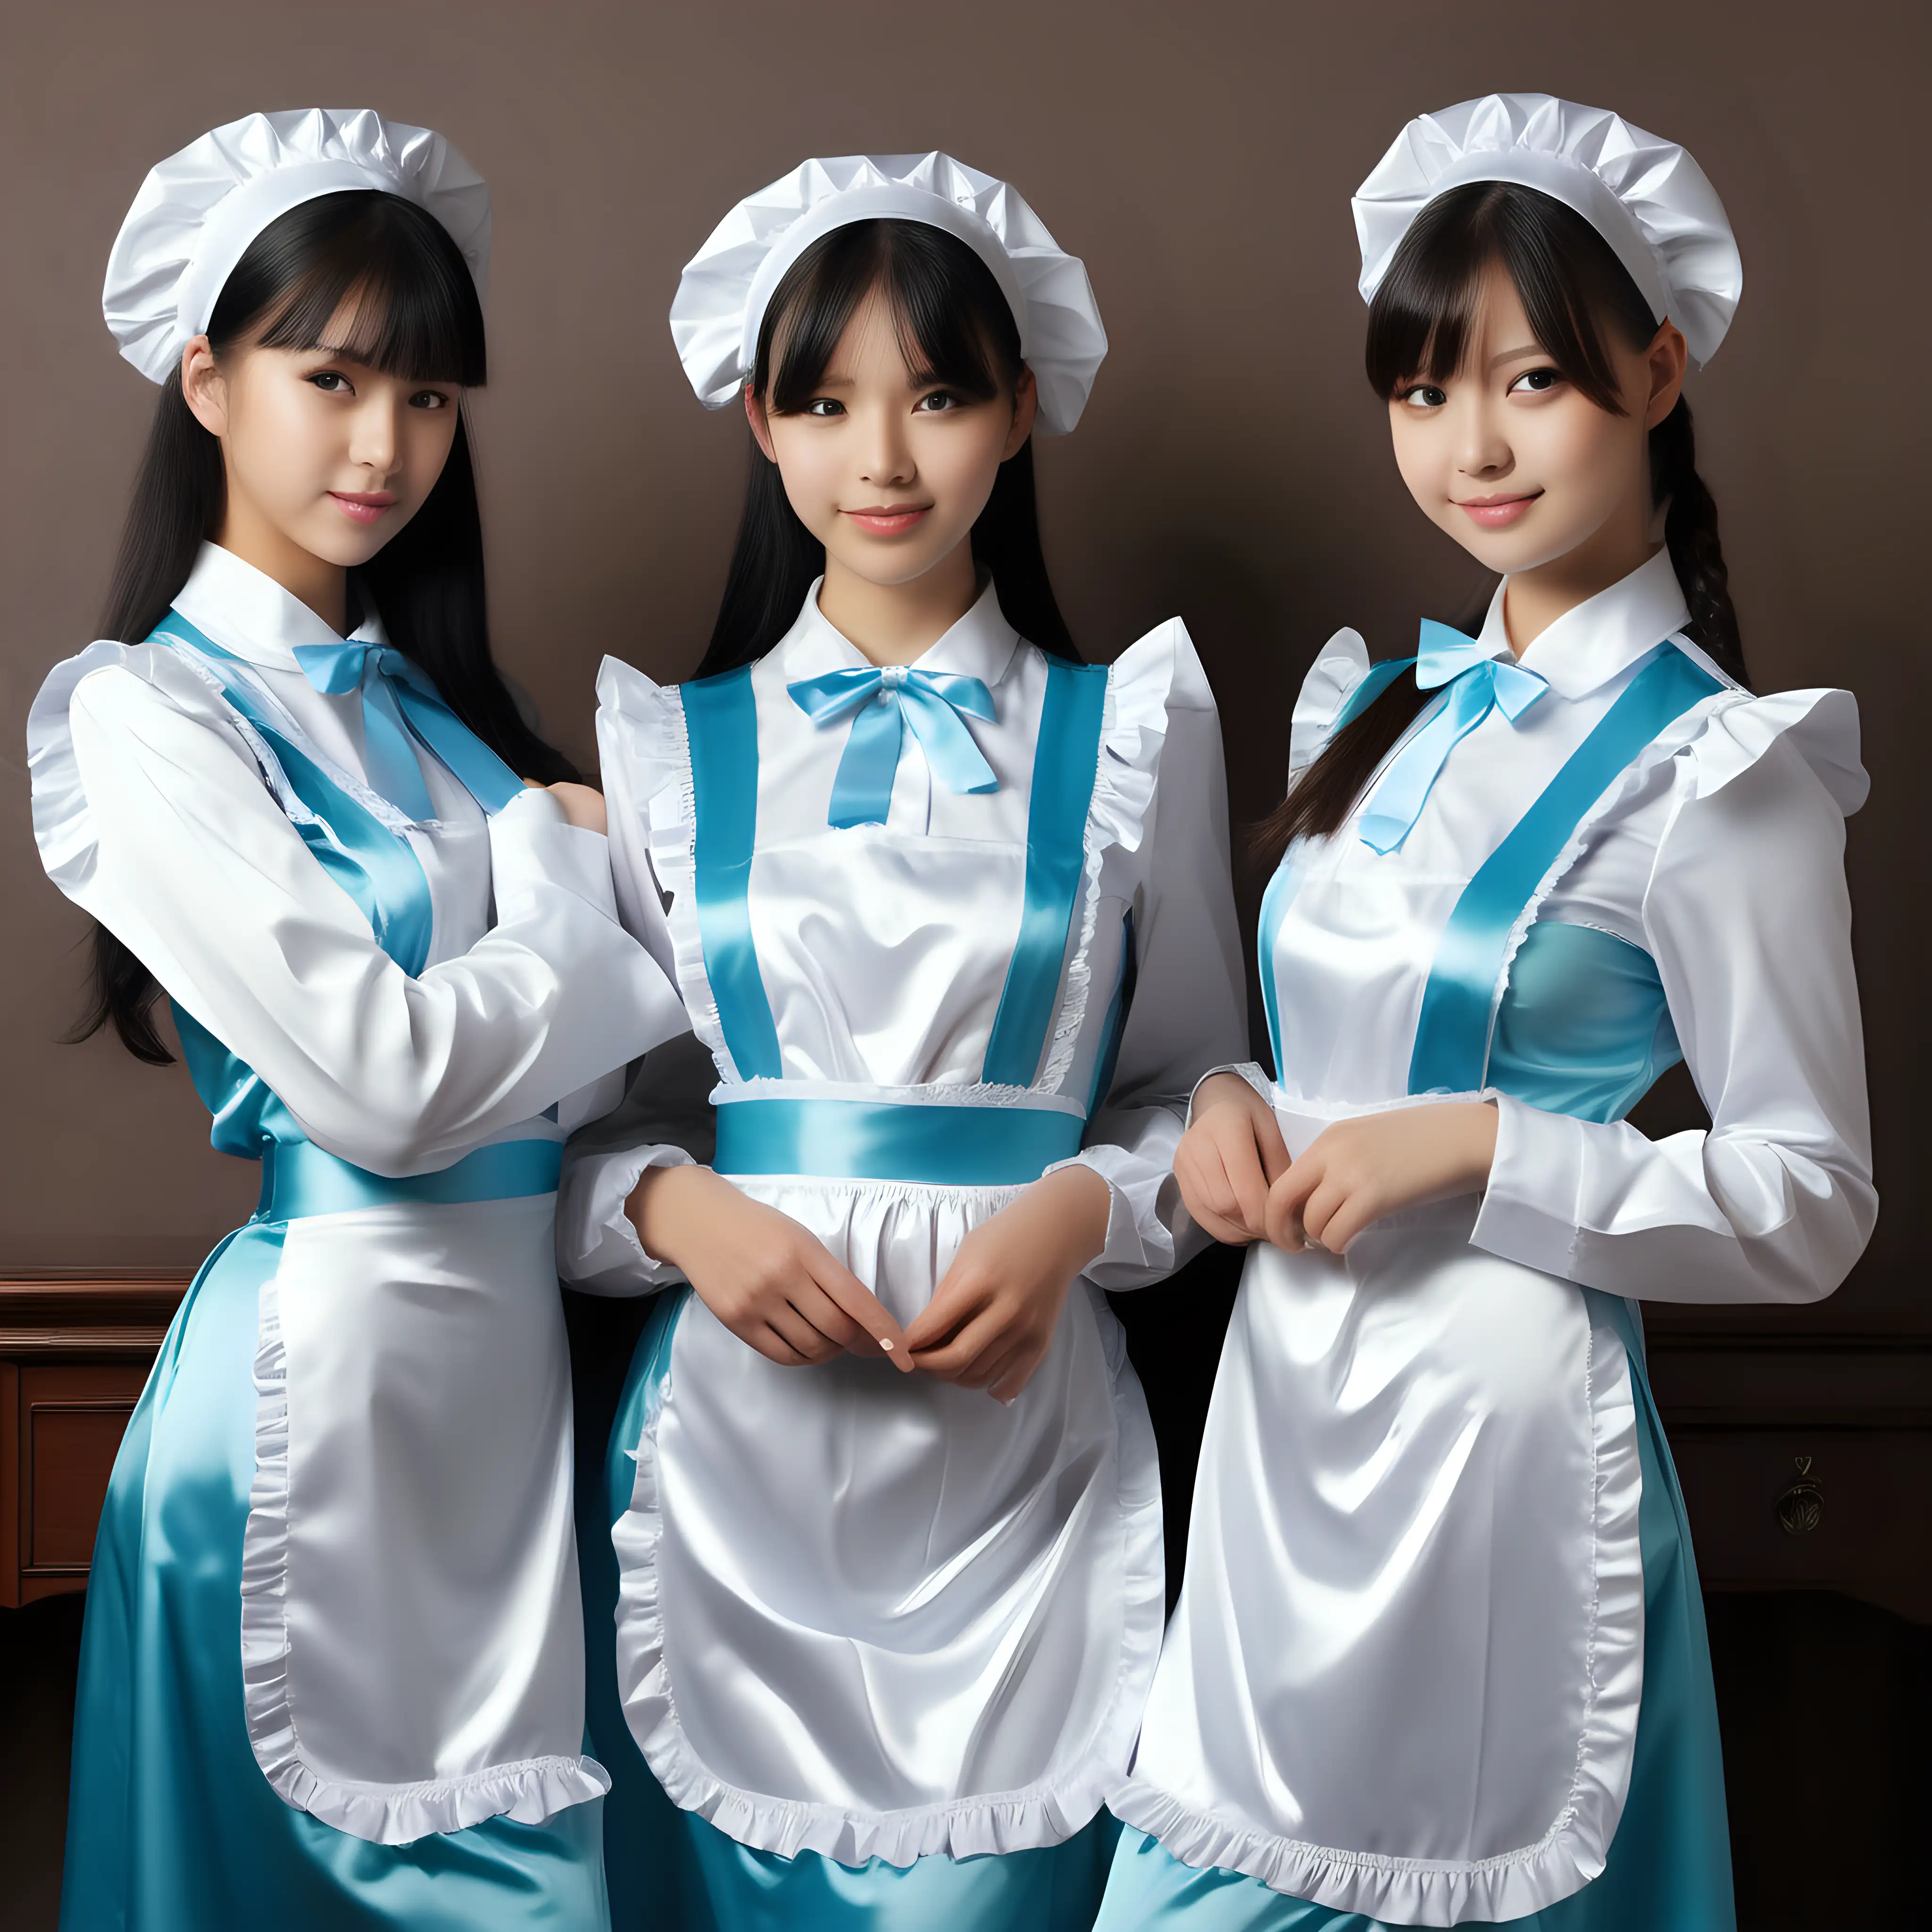 Elegant Girls in Satin Maid Uniforms Engaging in Delightful Activities